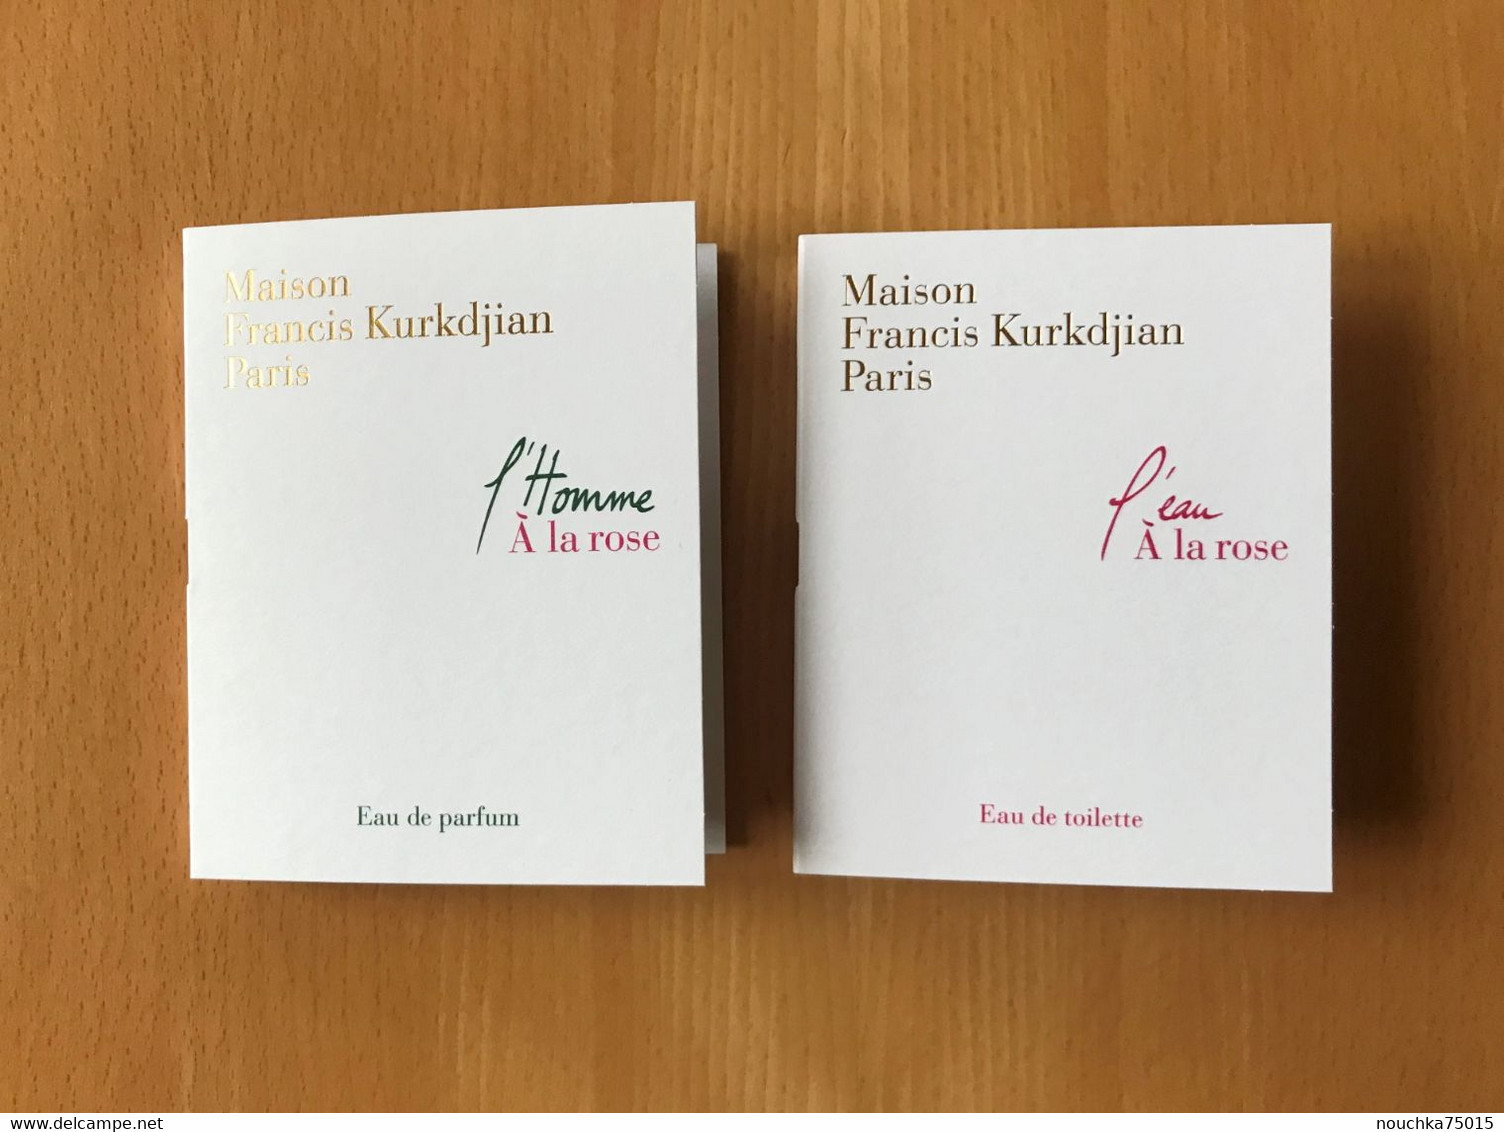 Maison Francis Kurkdjian - Lot De 2 échantillons Sous Cartes - Echantillons (tubes Sur Carte)